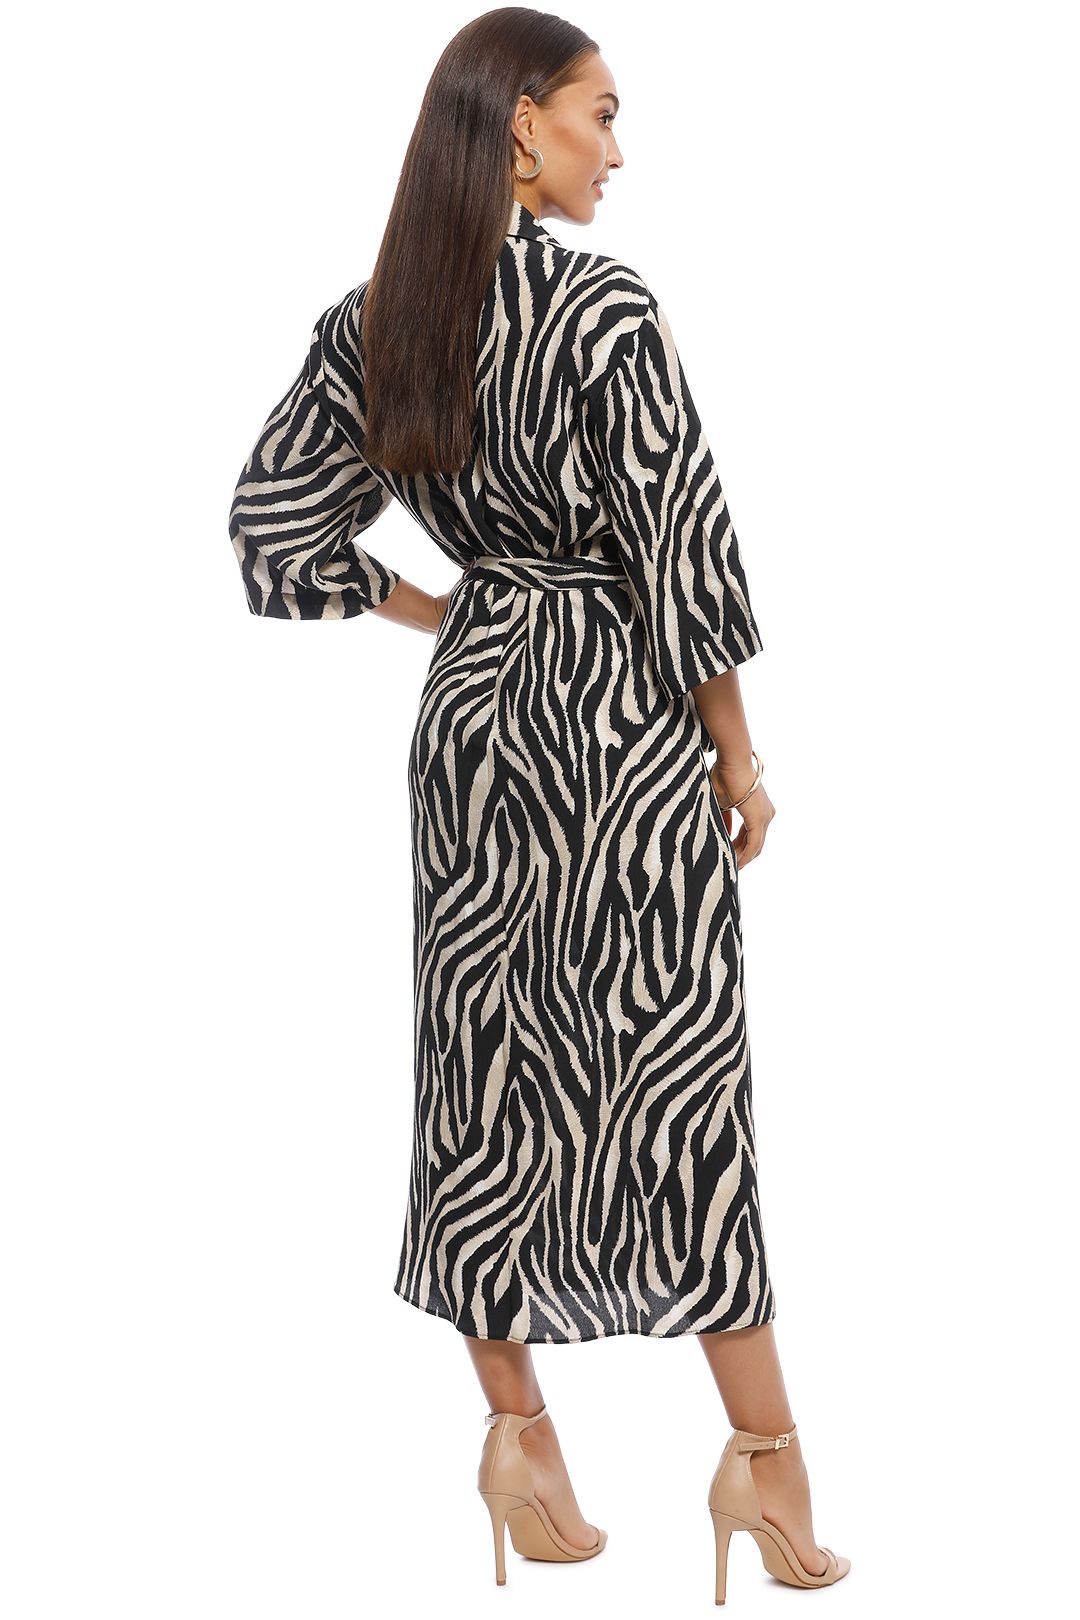 MNG - Zebra Animal Print Shirt Dress - Back